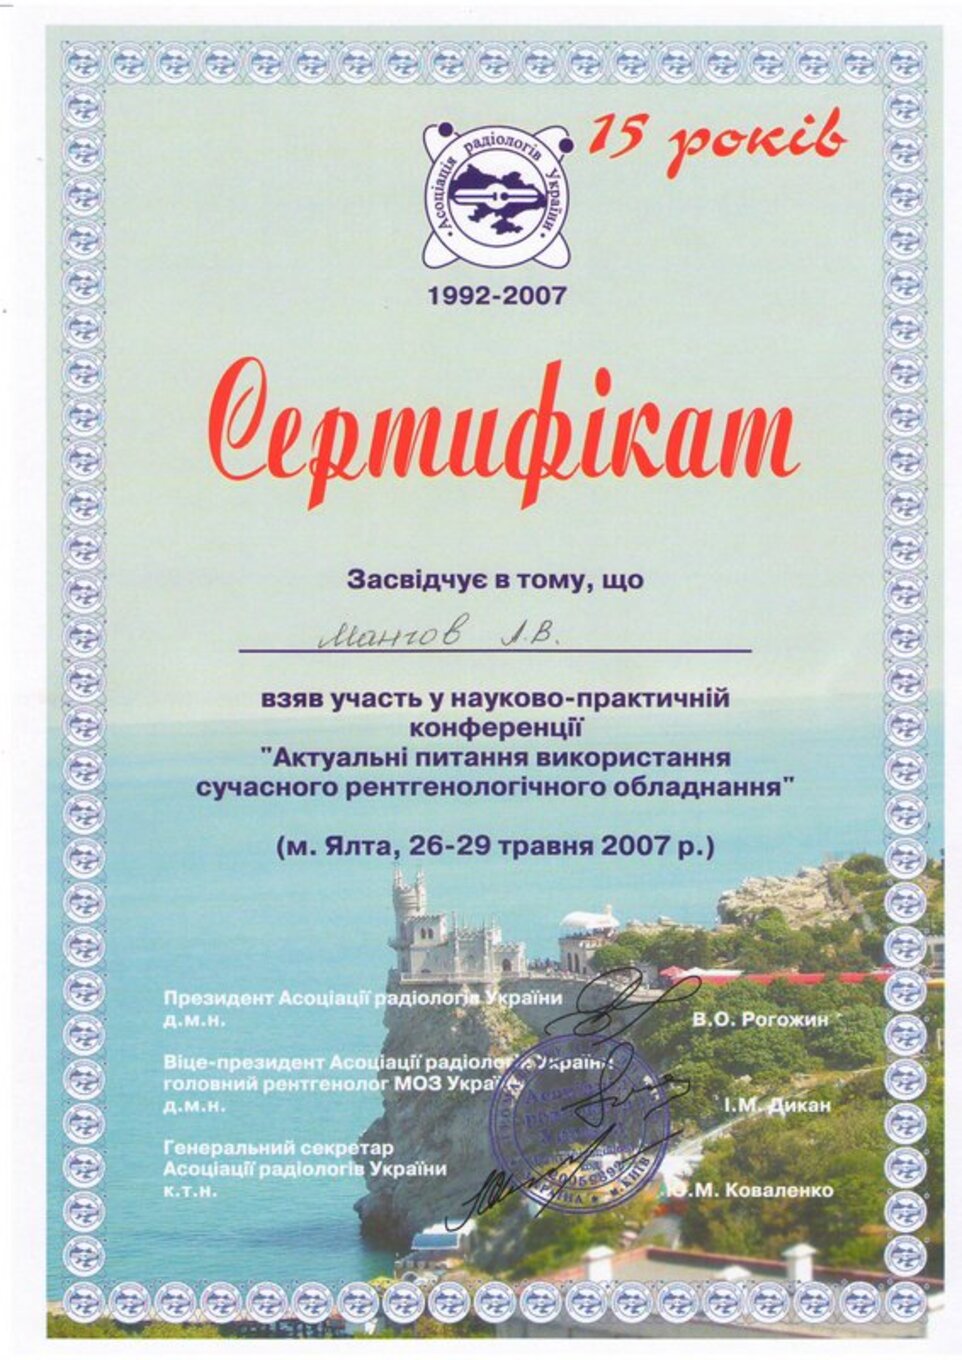 certificates/mangov-andrij-volodimirovich/mangov-certificates-20.jpg